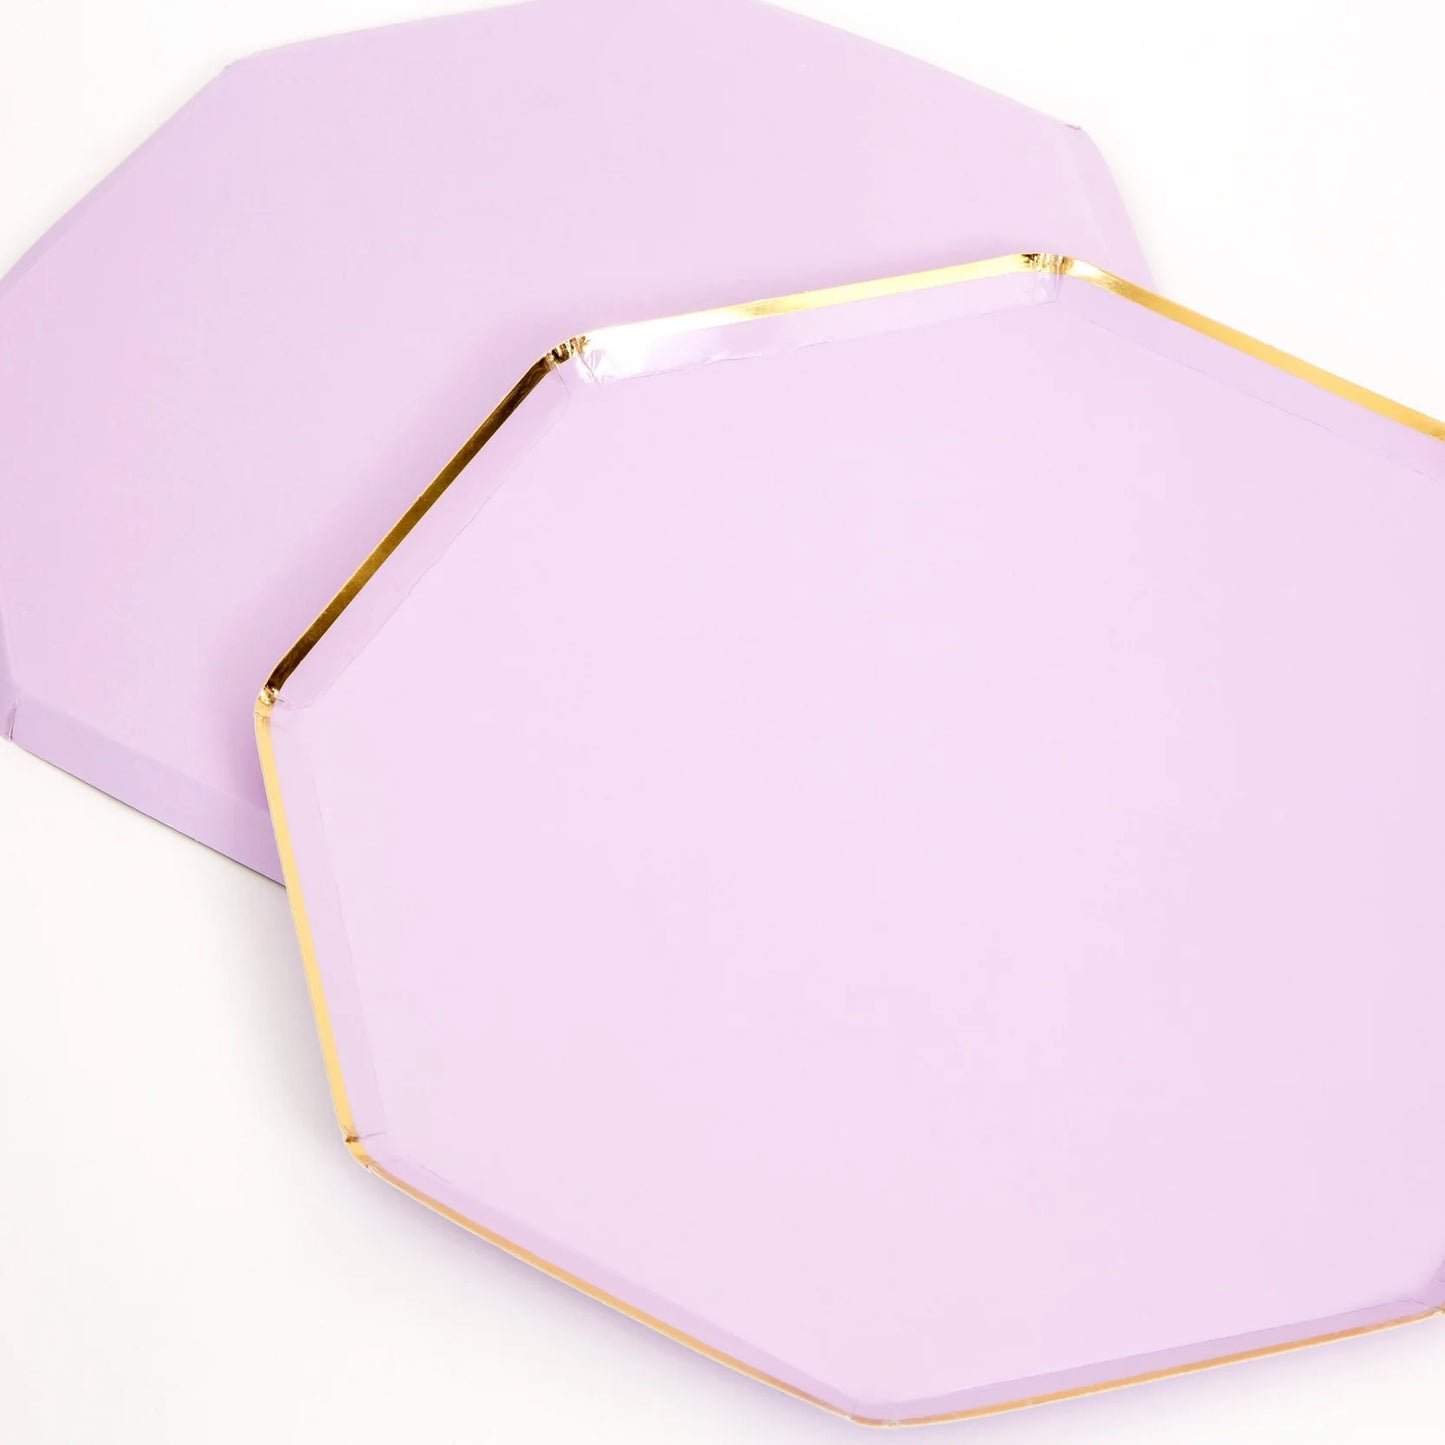 Lilac Side Plates